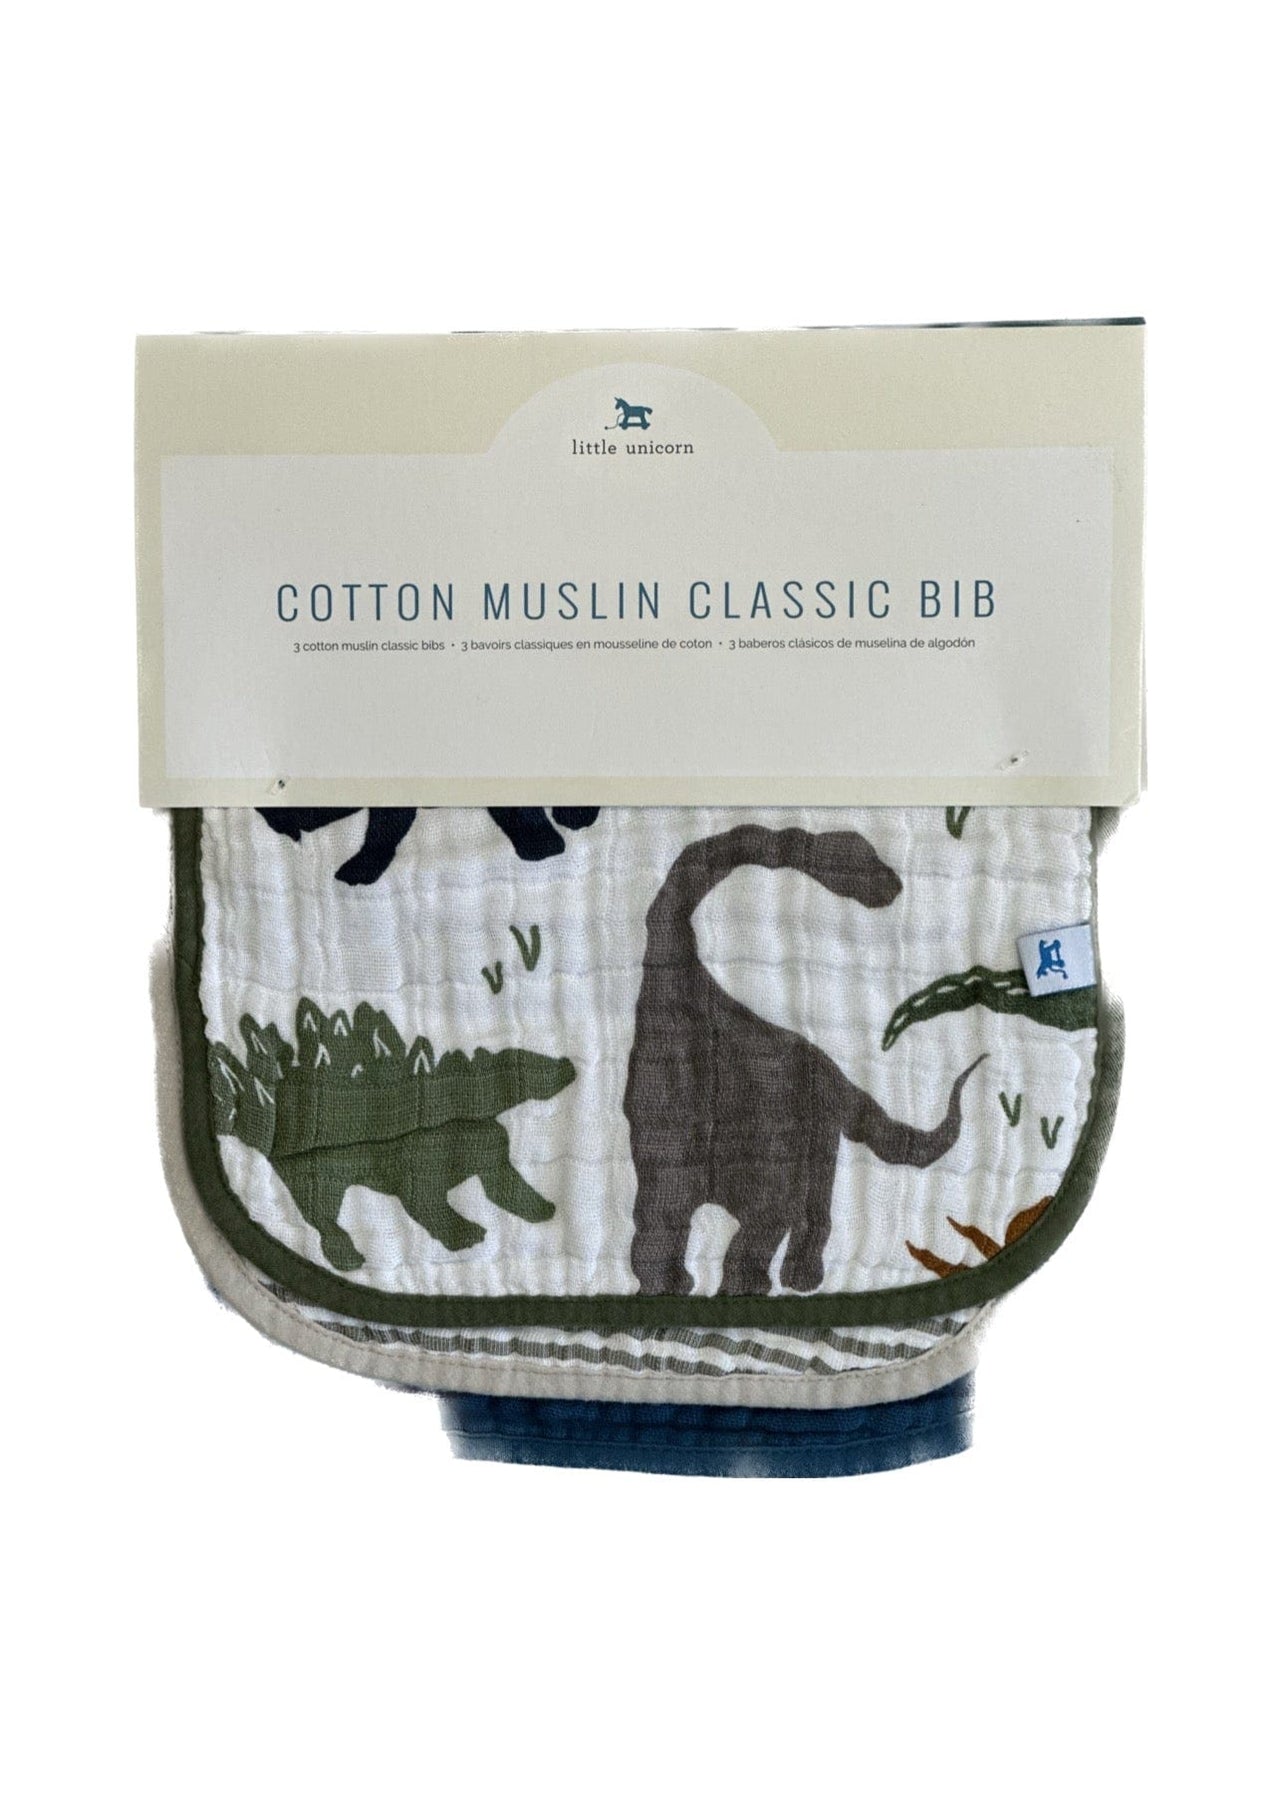 Classic Bib Cotton Muslin by Little Unicorn Little Unicorn Bibs Dino Friends